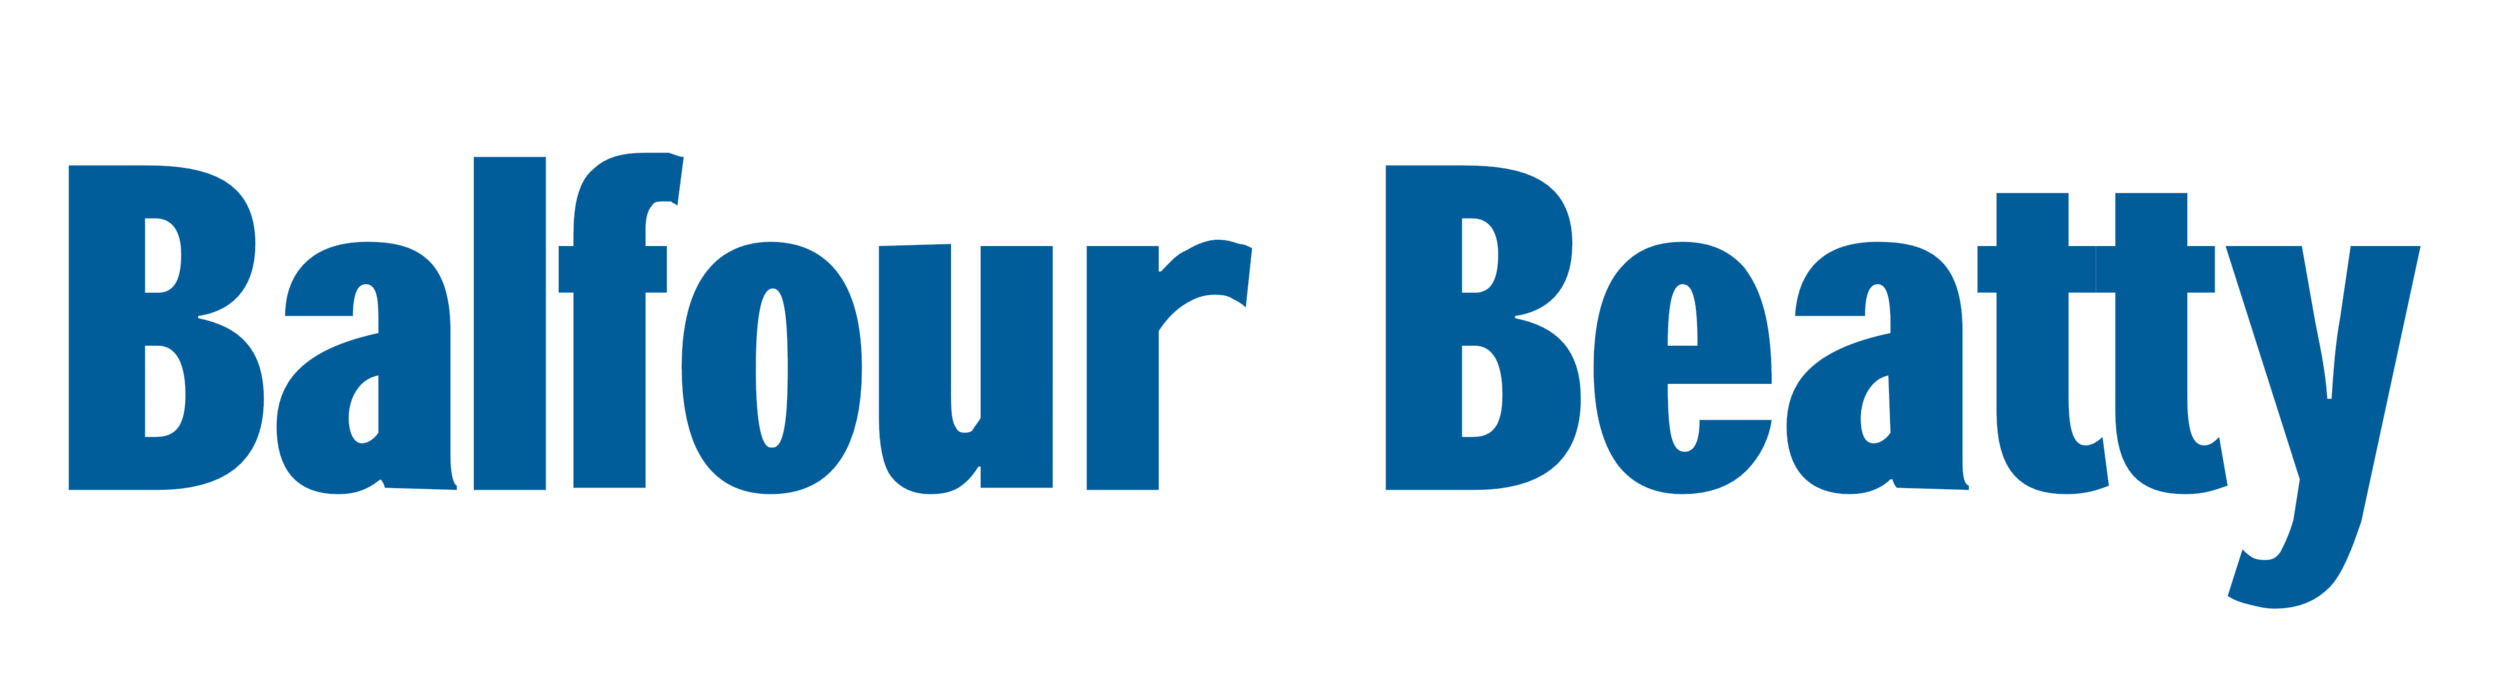 Balfour_Beatty_logo.png